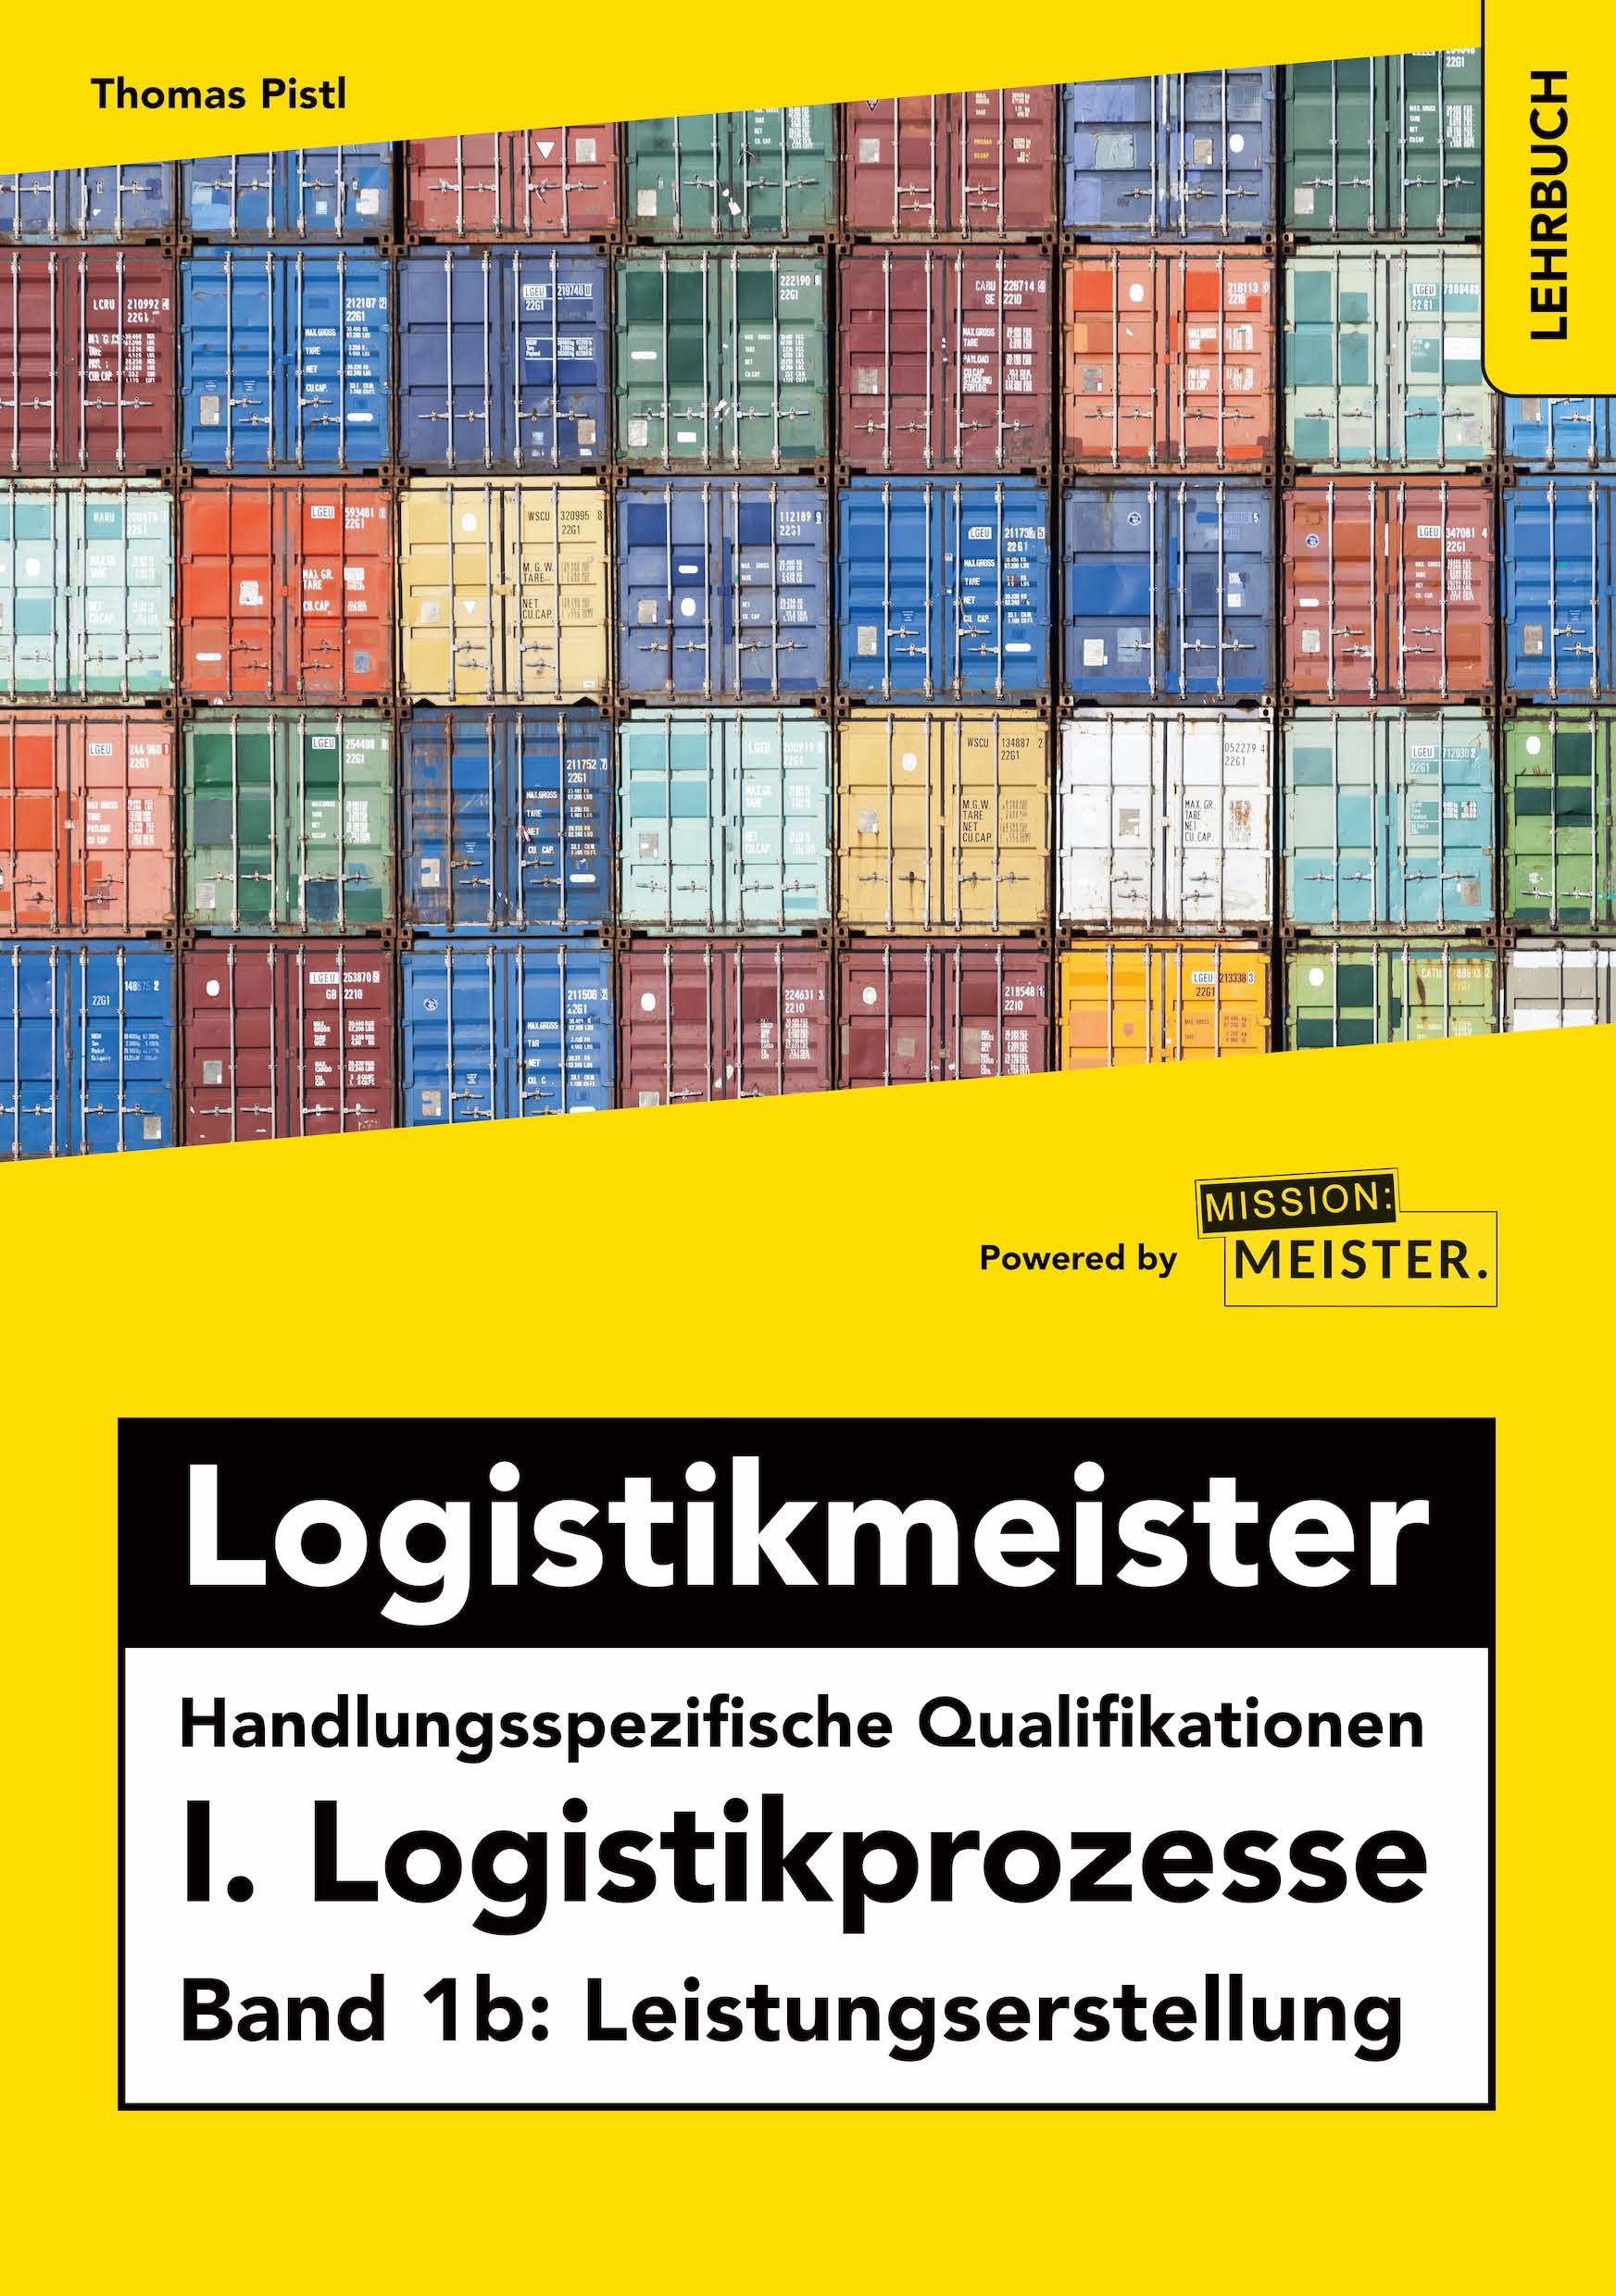 Logistikmeister HQ I. Logistikprozesse - Band 1b: Leistungserstellung